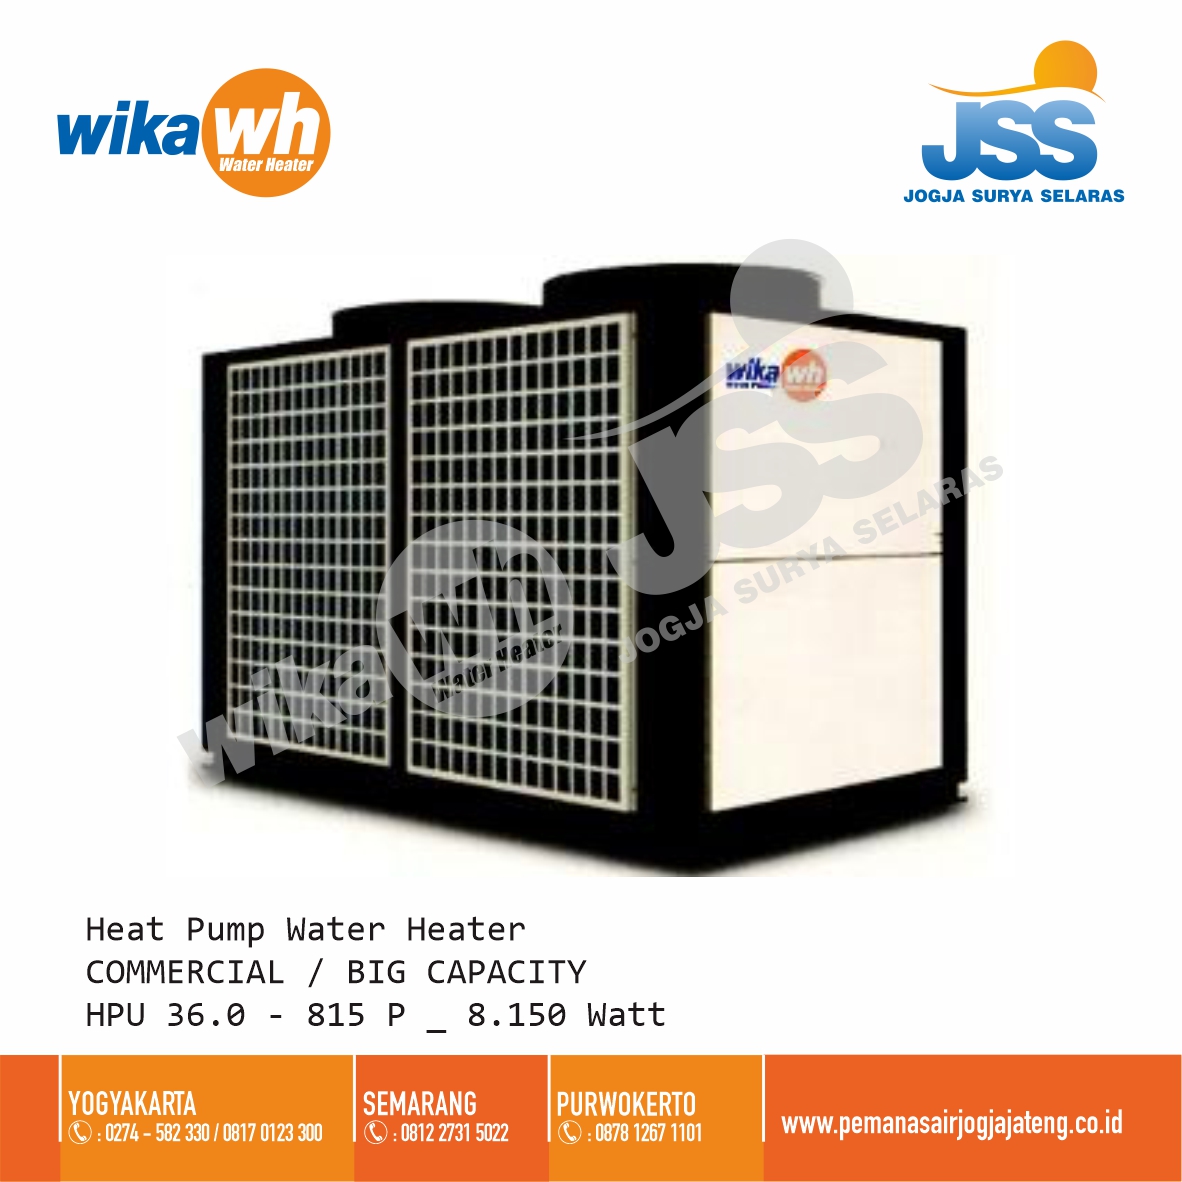 Wika Heat Pump Water Heater Commercial / Big Capacity